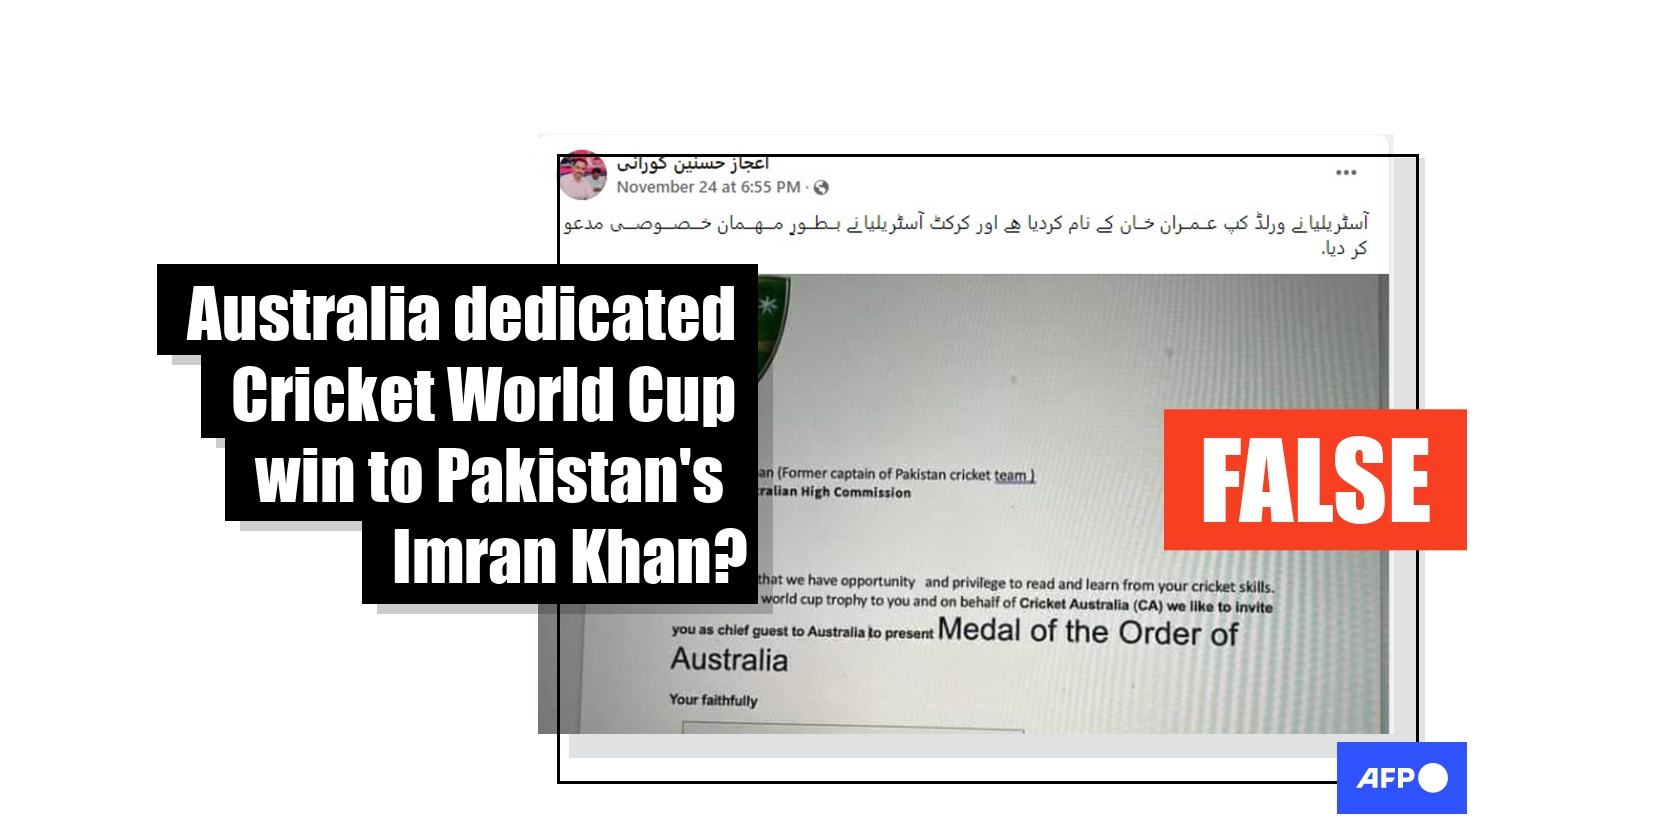 Fake letter circulates claiming Australia dedicated Cricket World